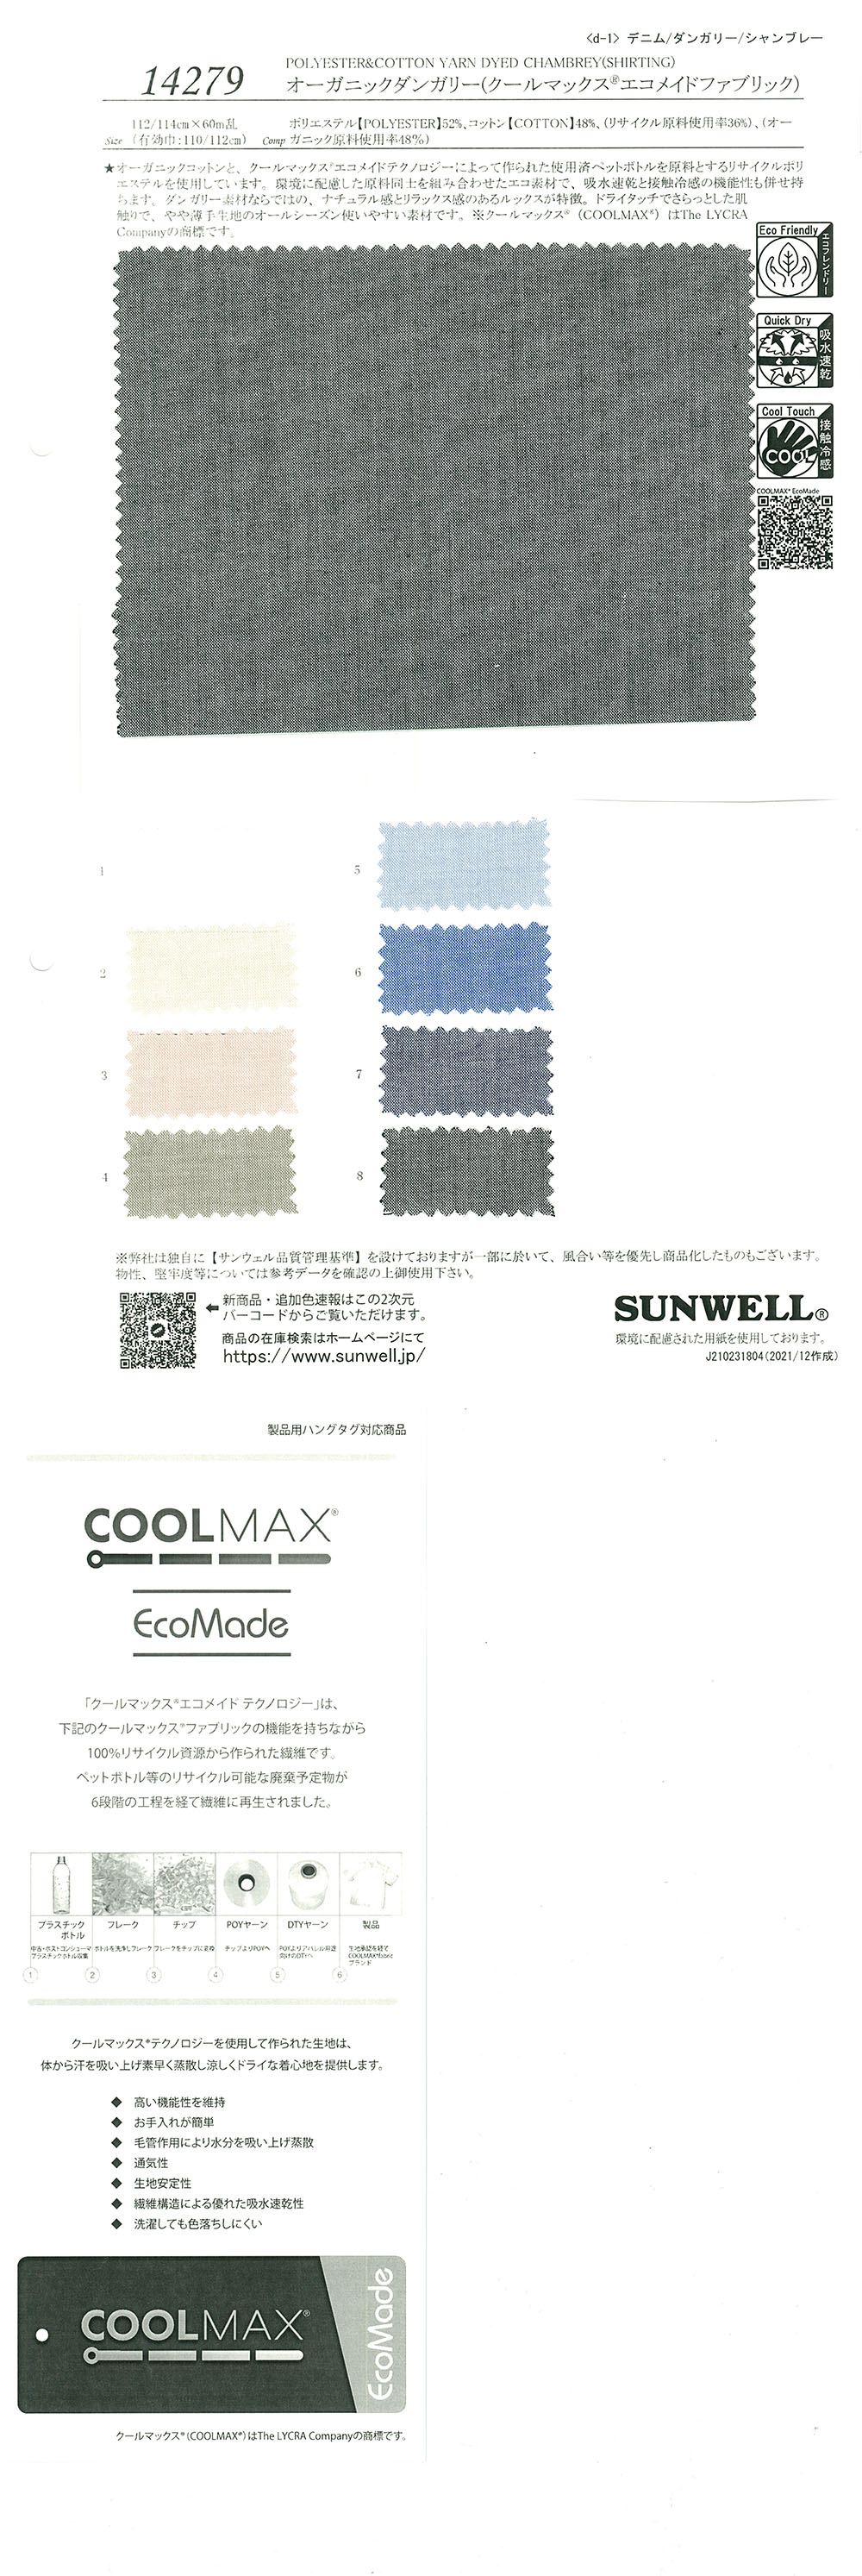 14279 Salopette Biologique (Tissu Coolmax(R) Ecomade)[Fabrication De Textile] SUNWELL